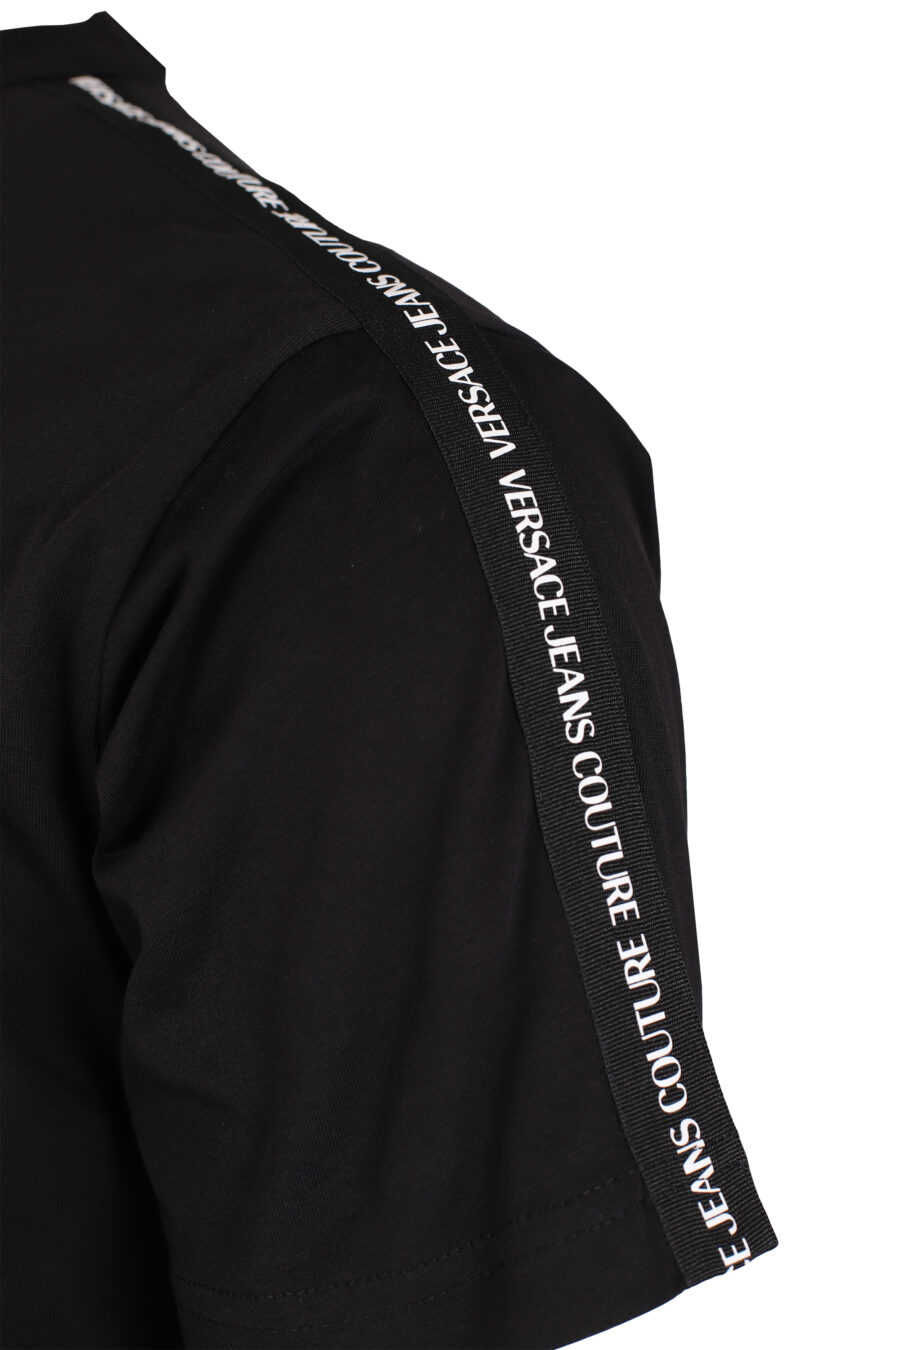 Camiseta negra con logo mini en hombros - IMG 4013